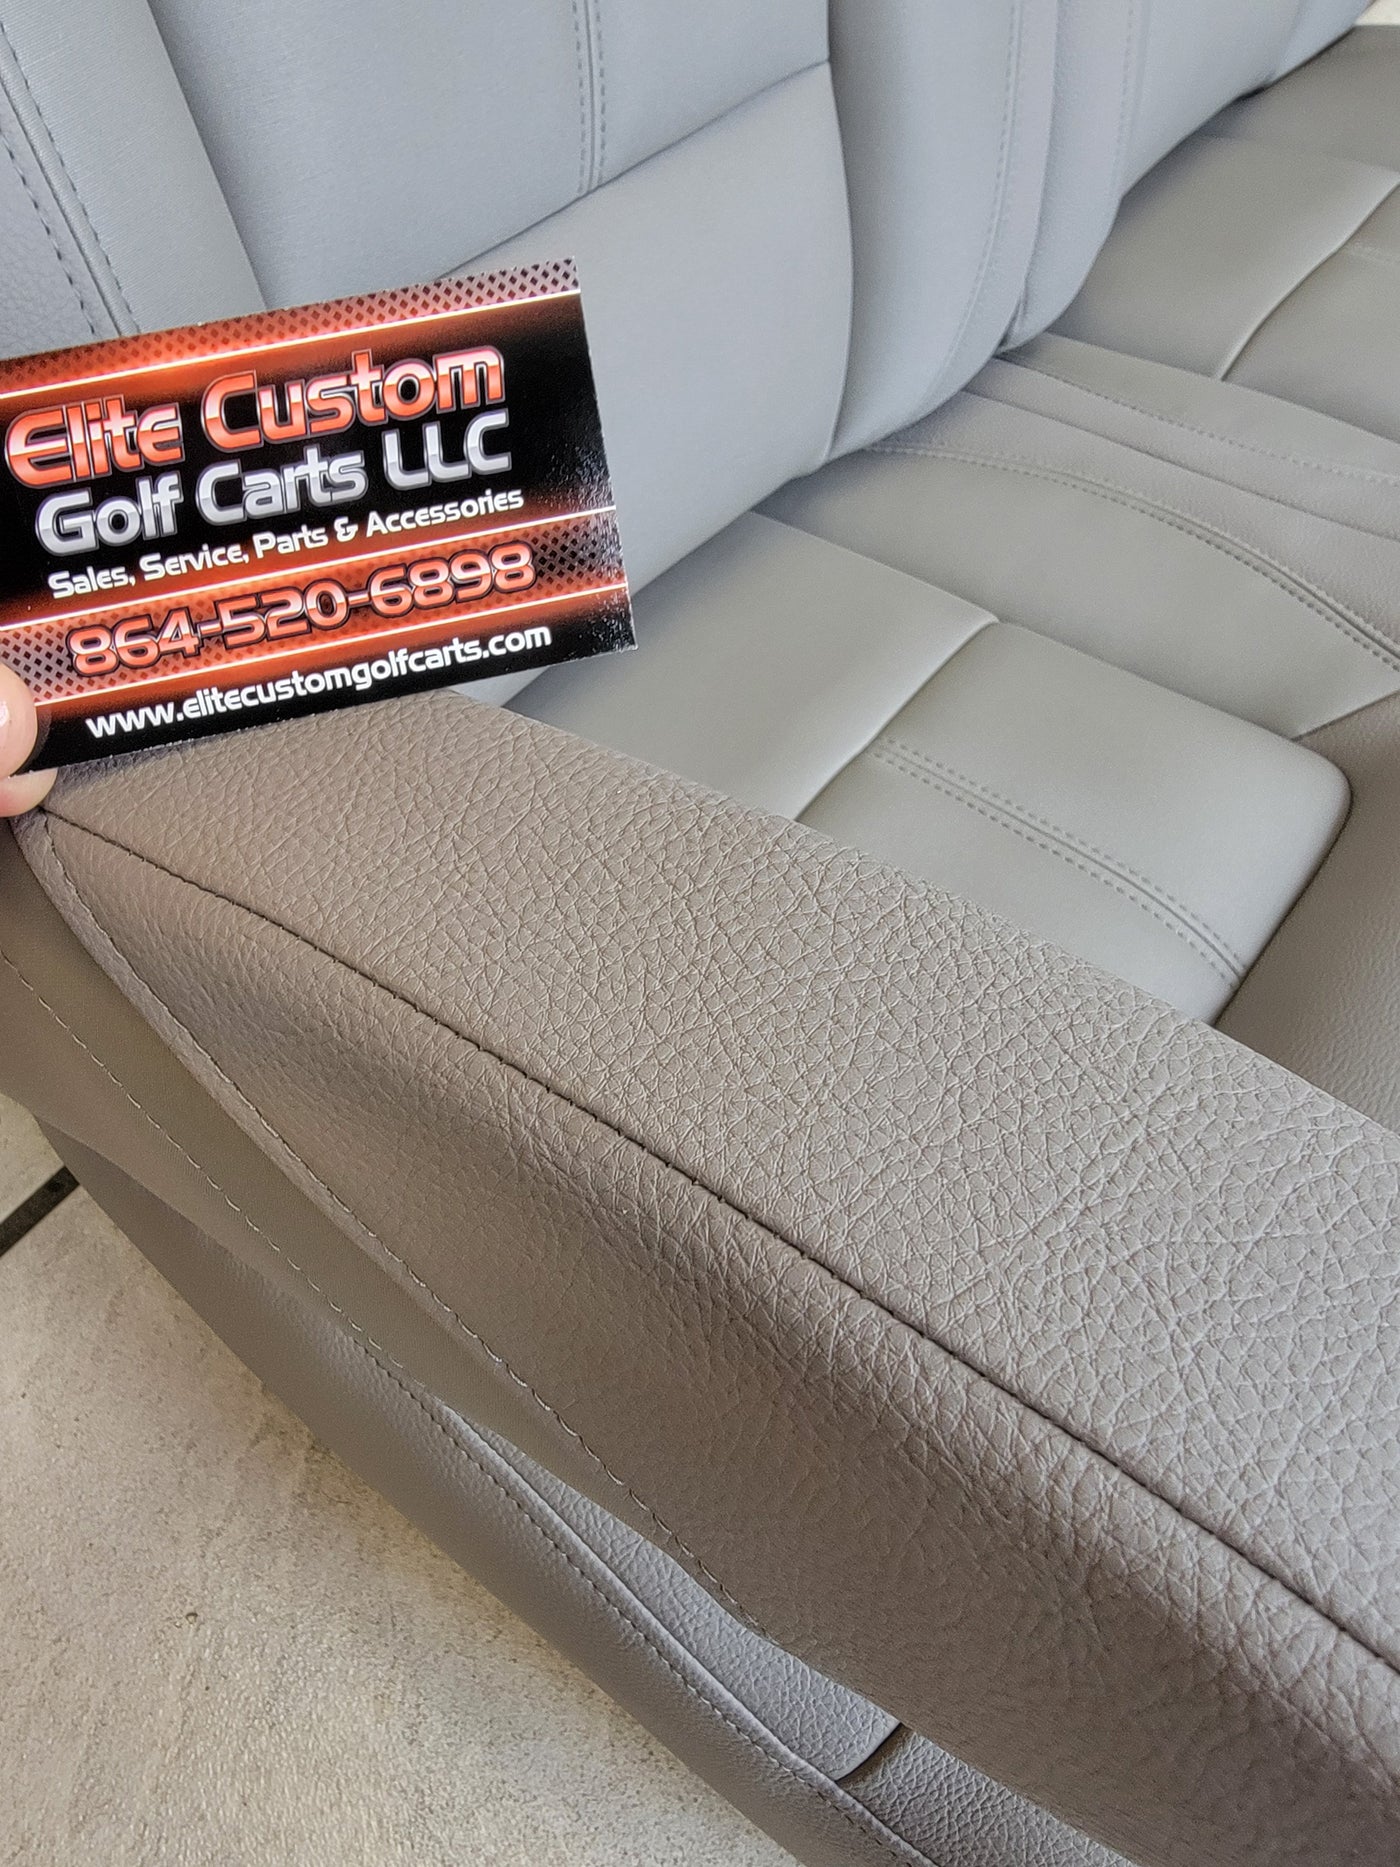 EZGO TXT Golf Cart American Sportster High Back Premium Seats w/Armrest